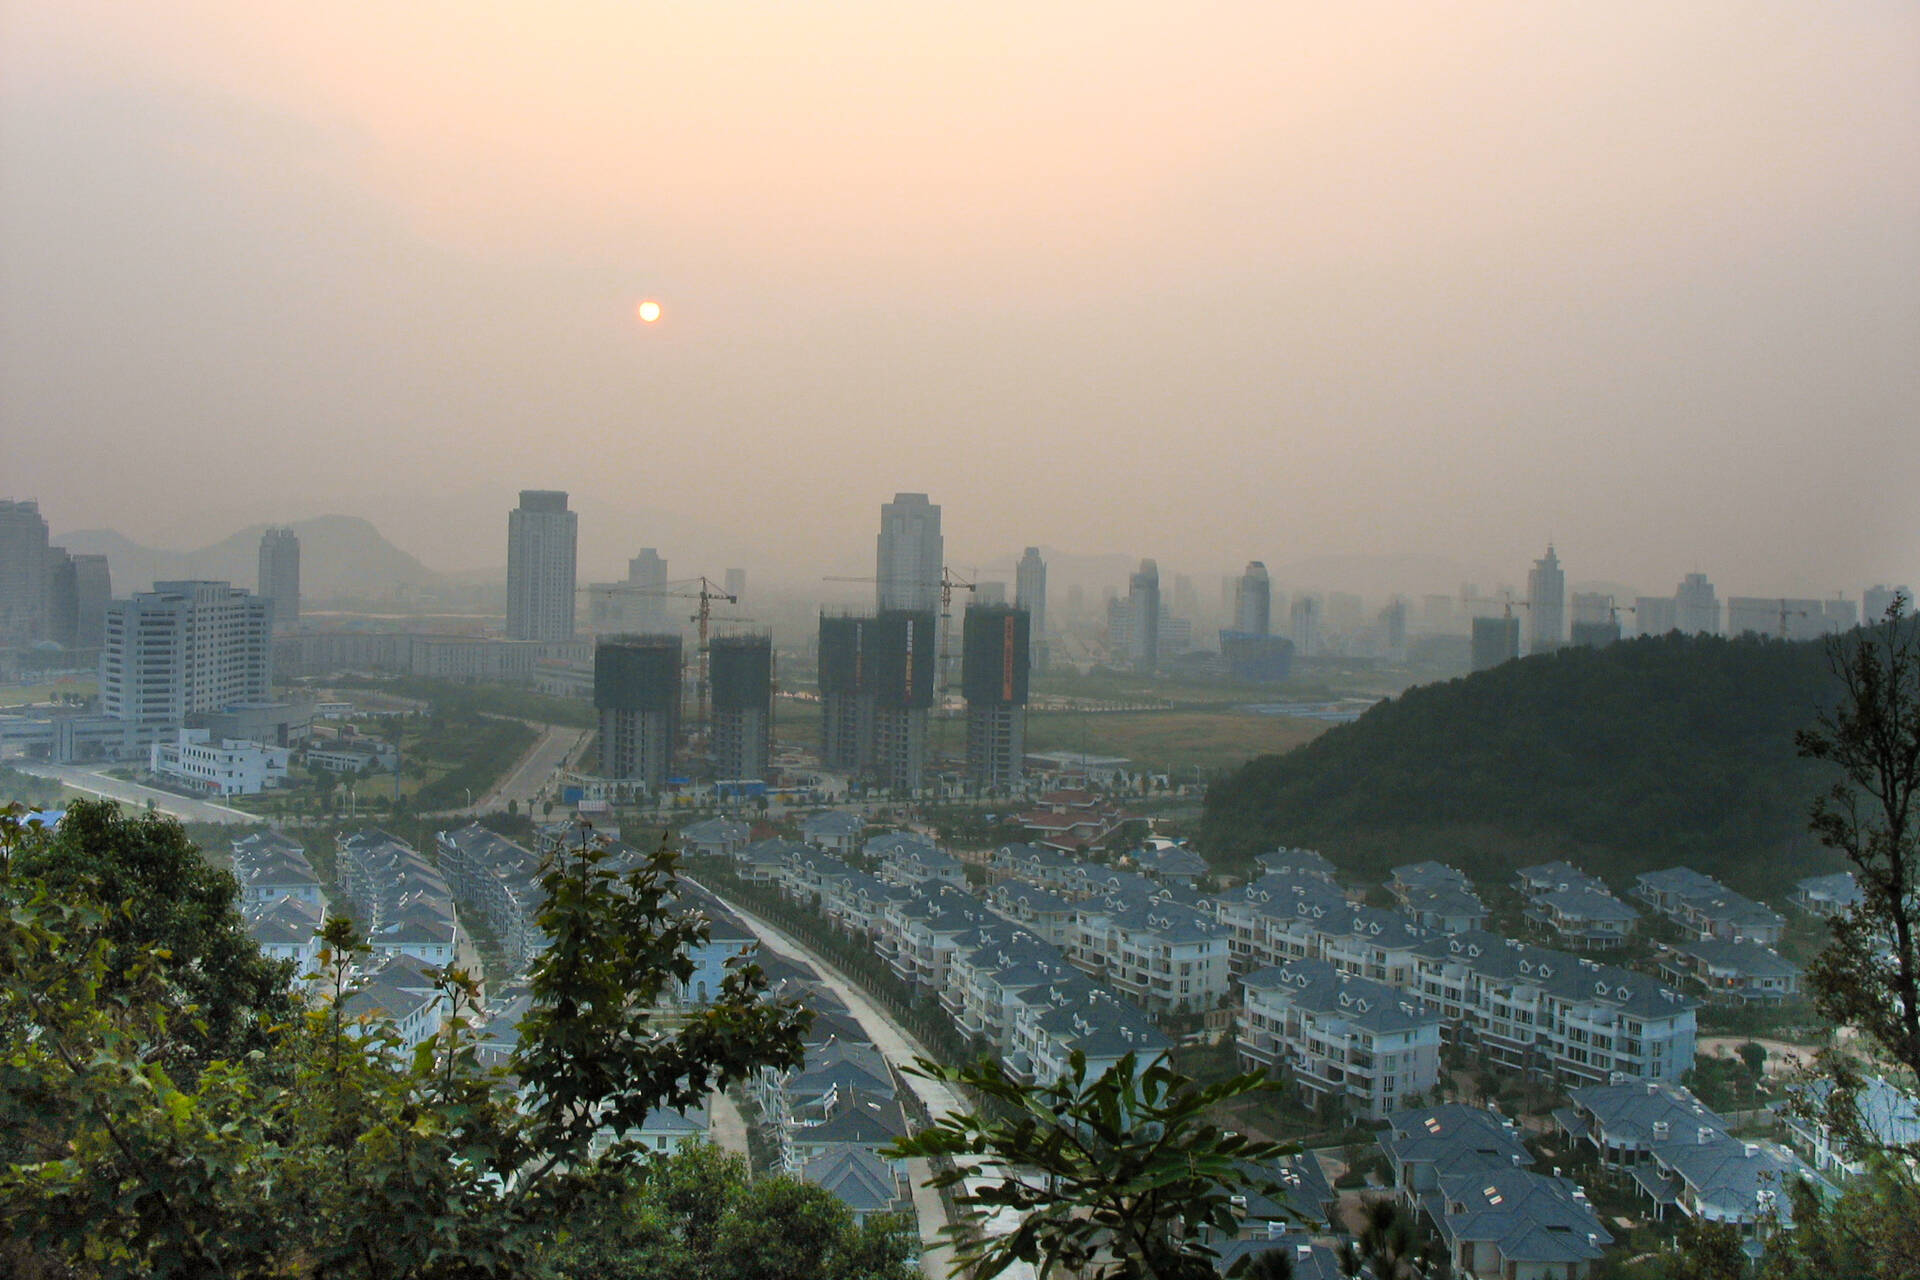 Biogas: smog i byen Taizhou